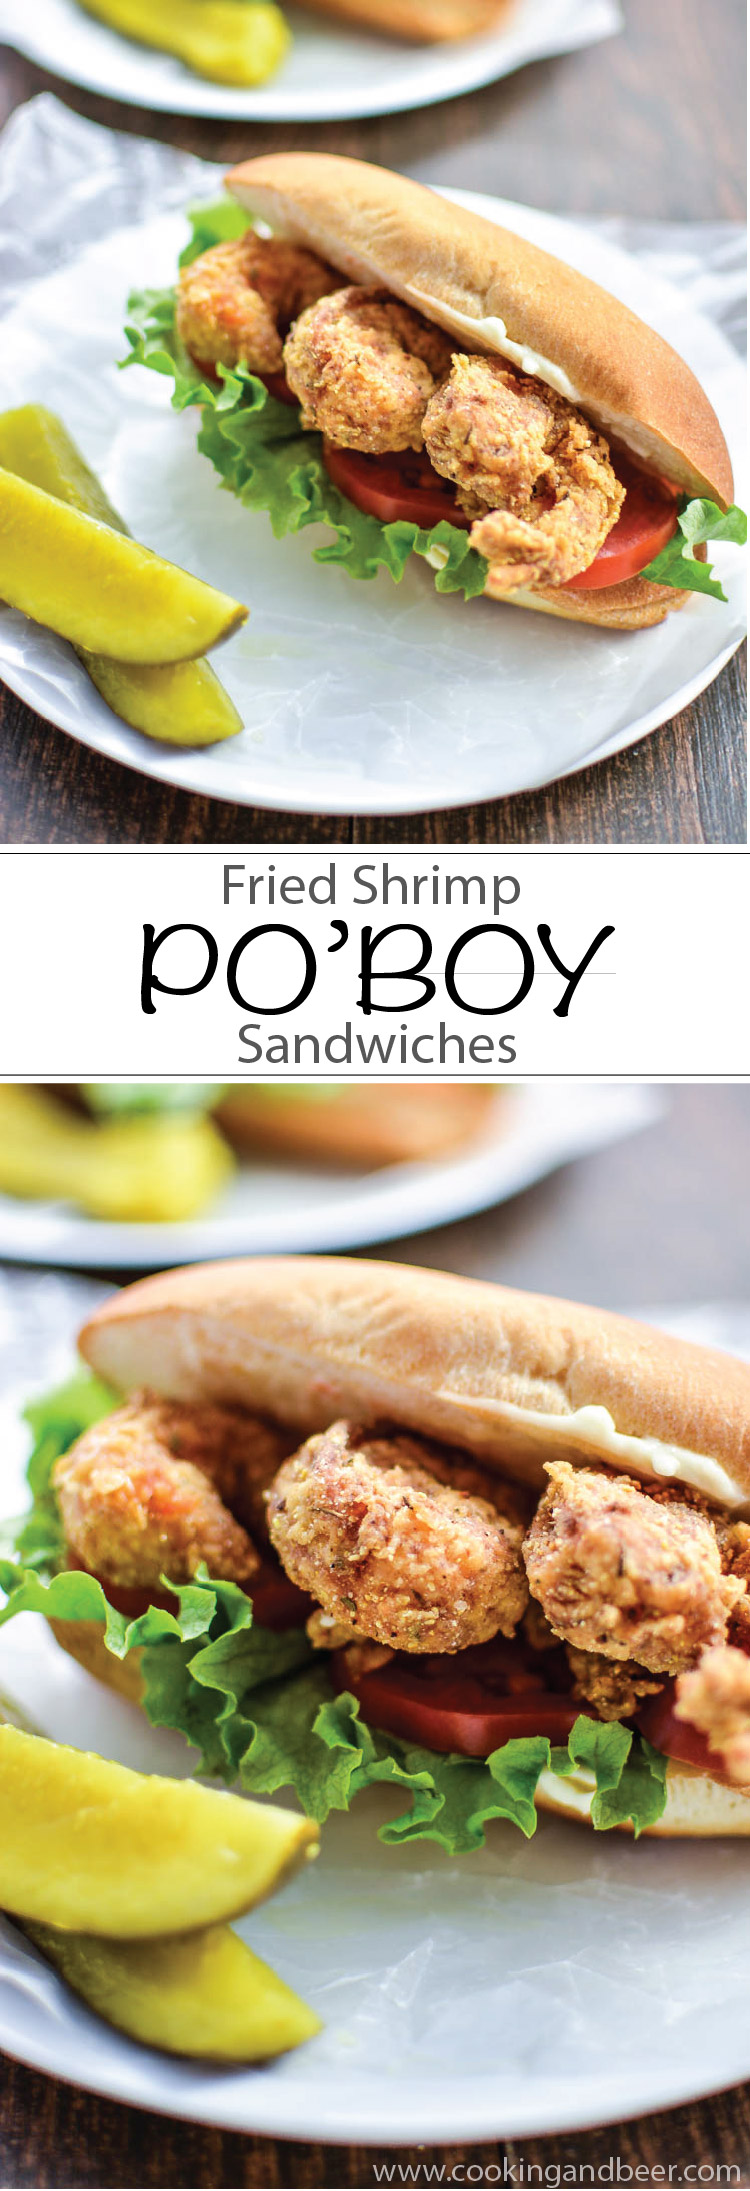 Fried Shrimp Po'Boy Sandwiches | www.cookingandbeer.com